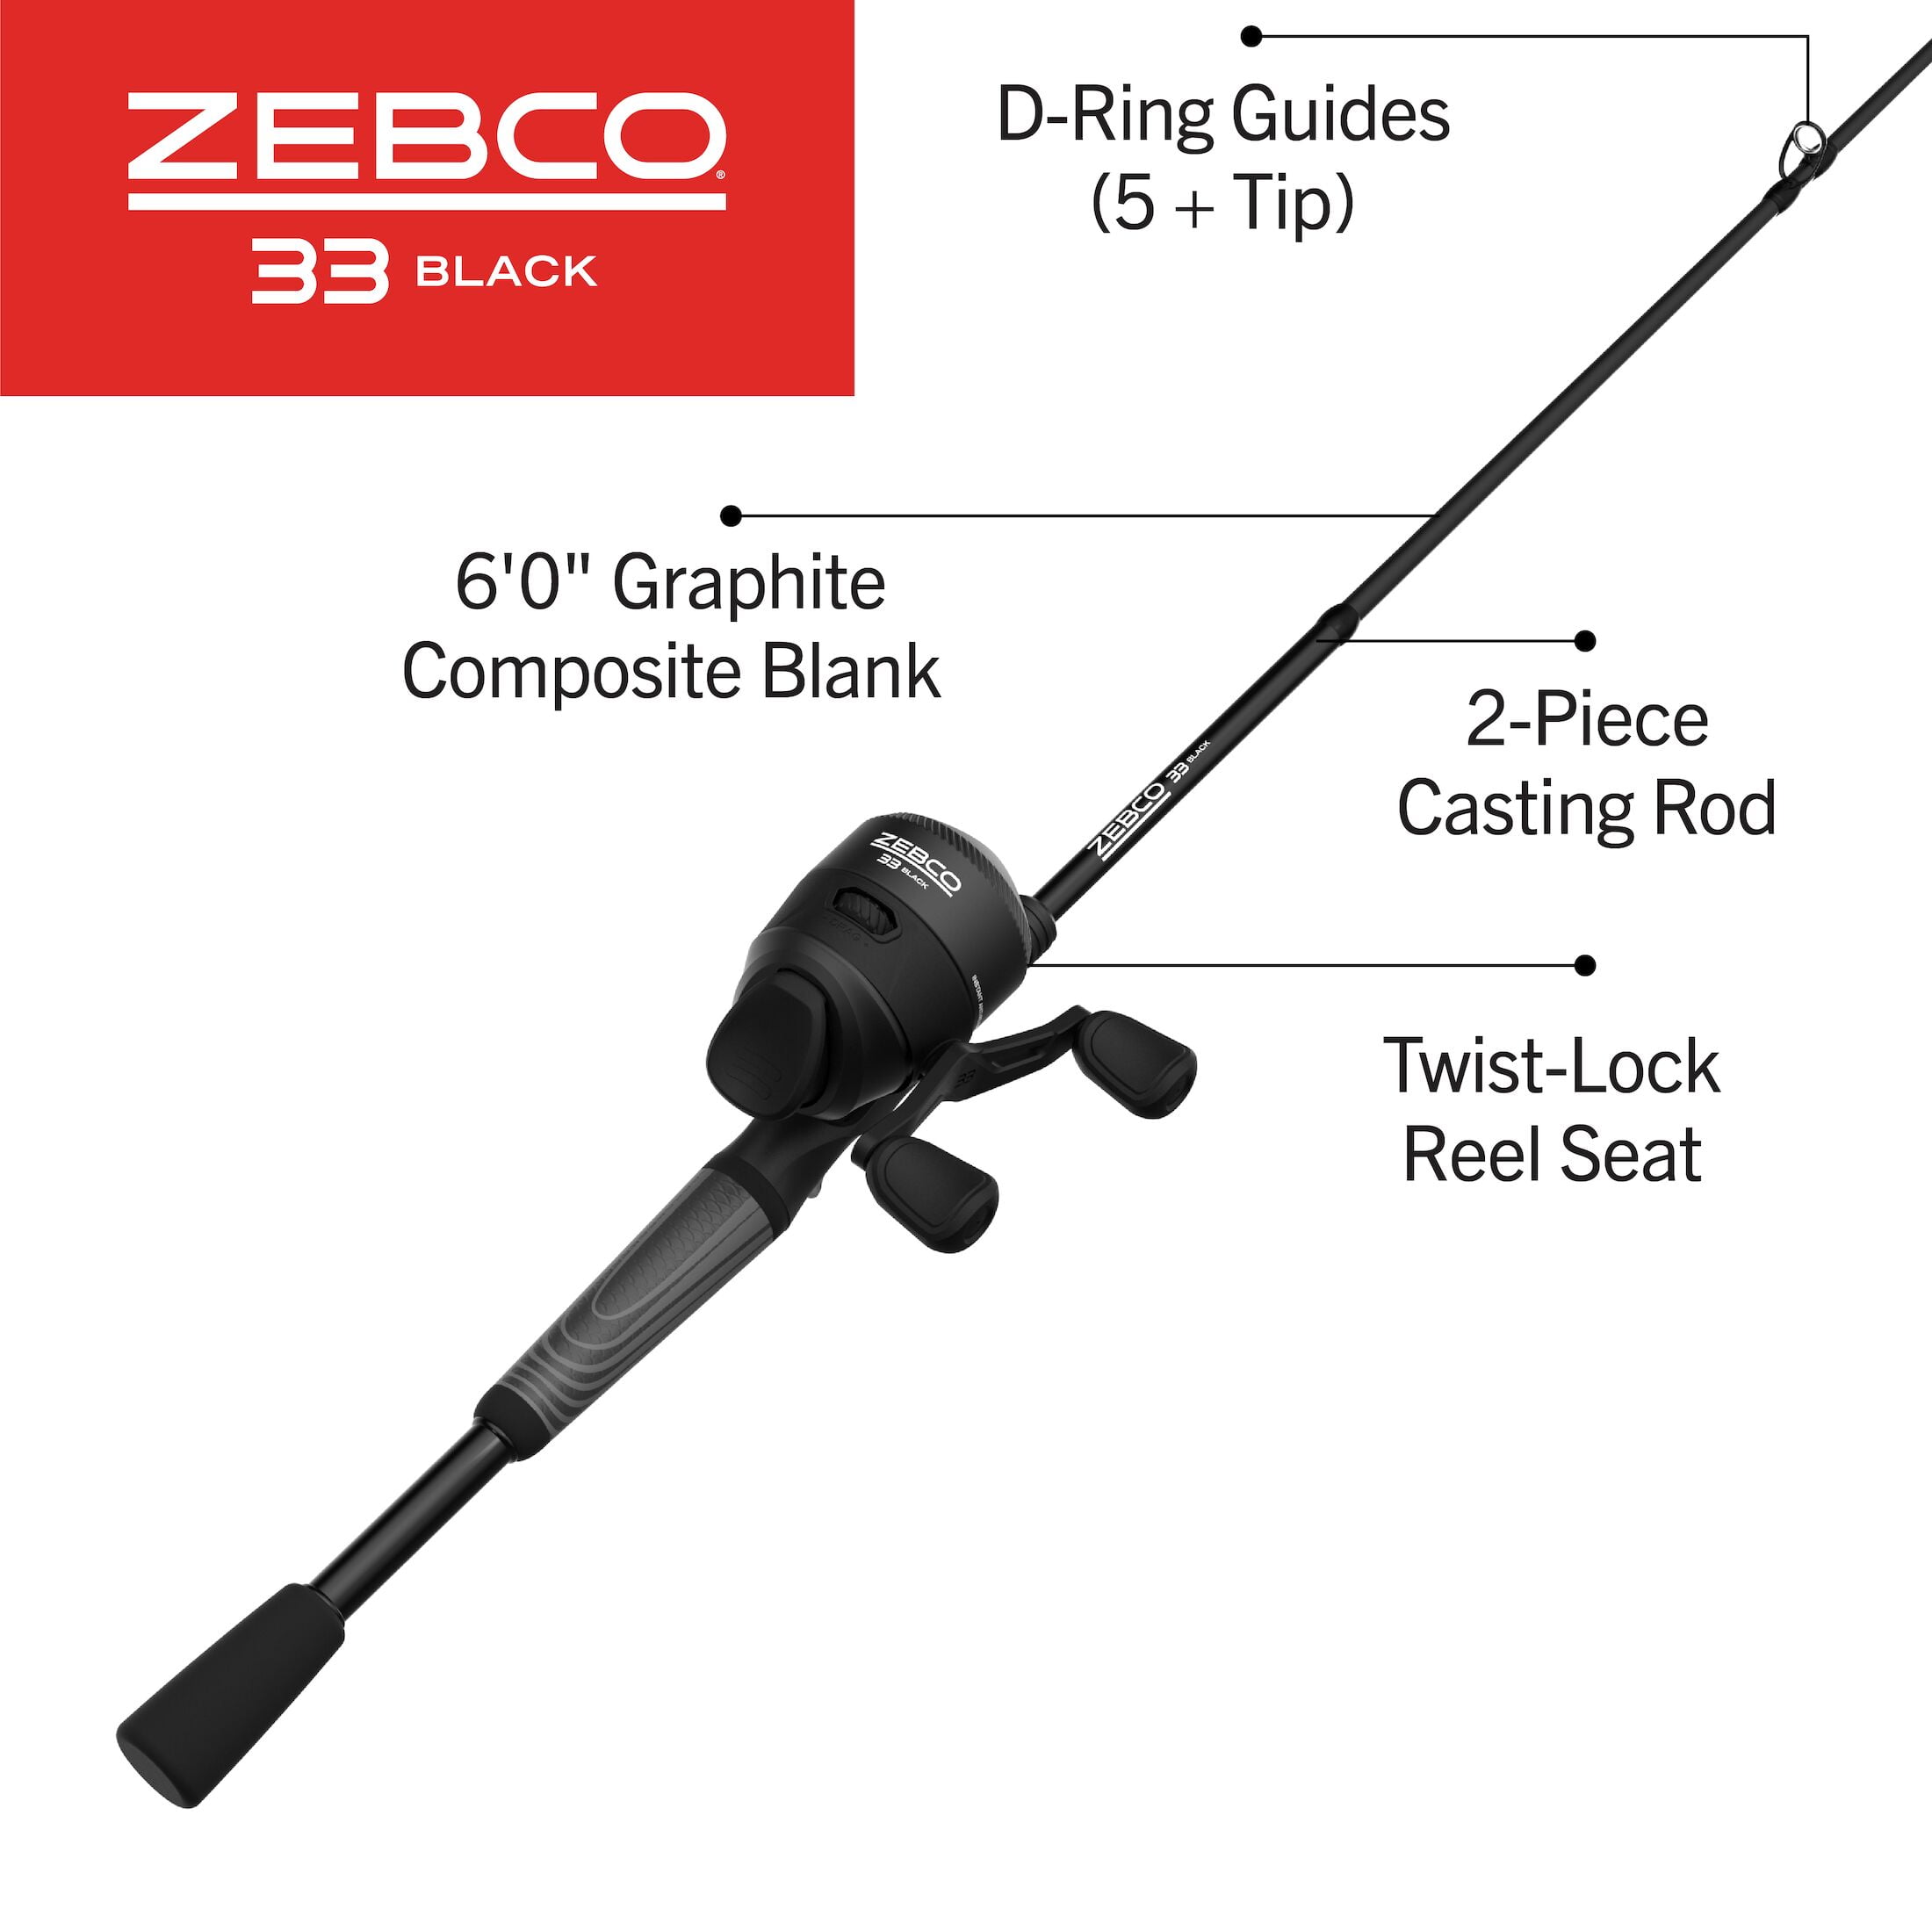 Zebco Spincast Combo Medium Power Fishing Rod & Reel Combos for sale